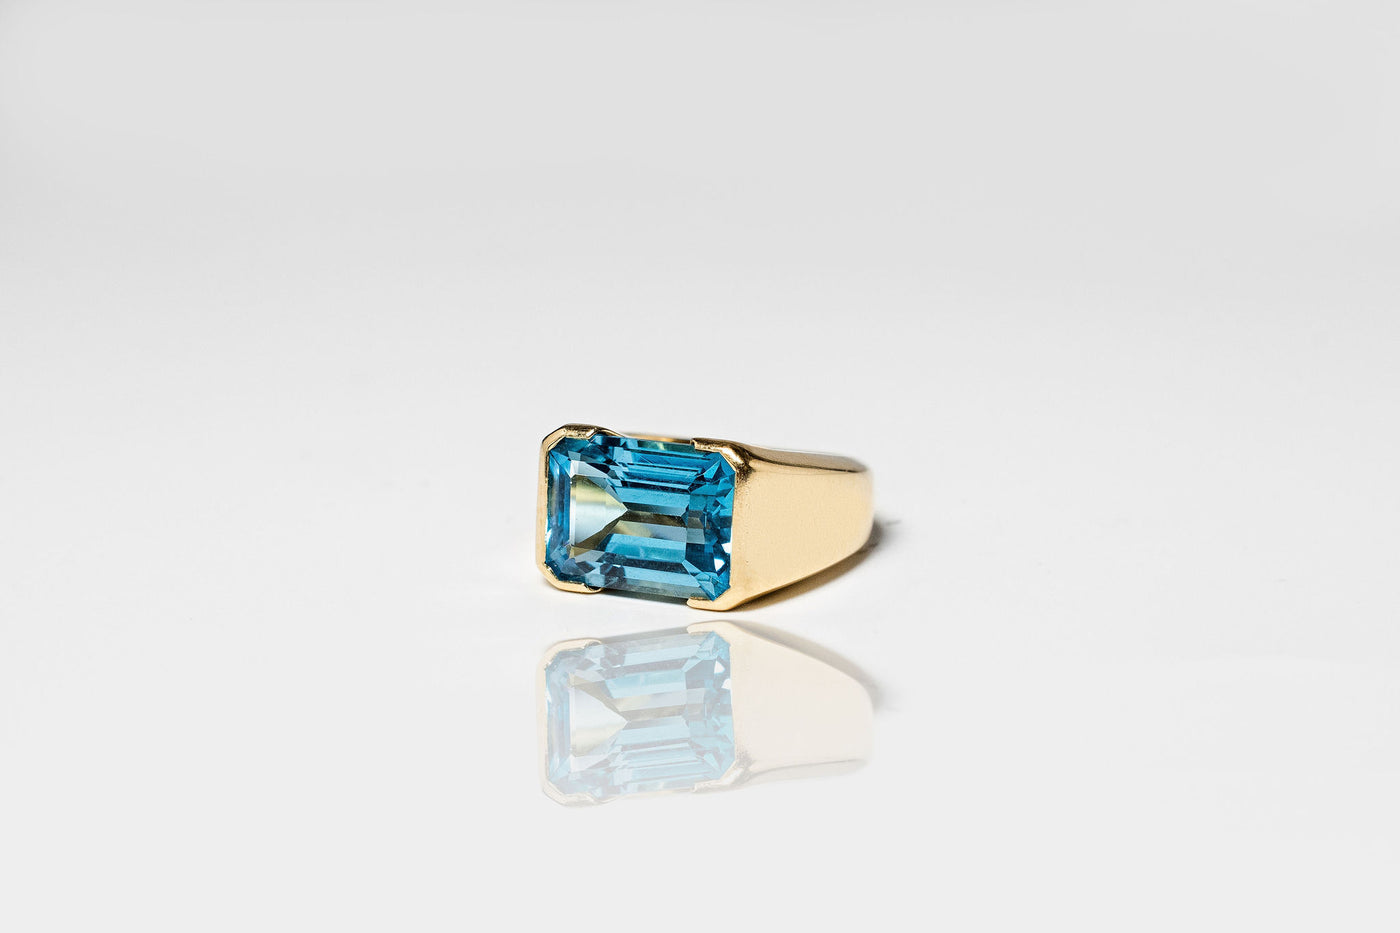 8ct Flawless Swiss Blue Topaz Ring - 14k Yellow Gold